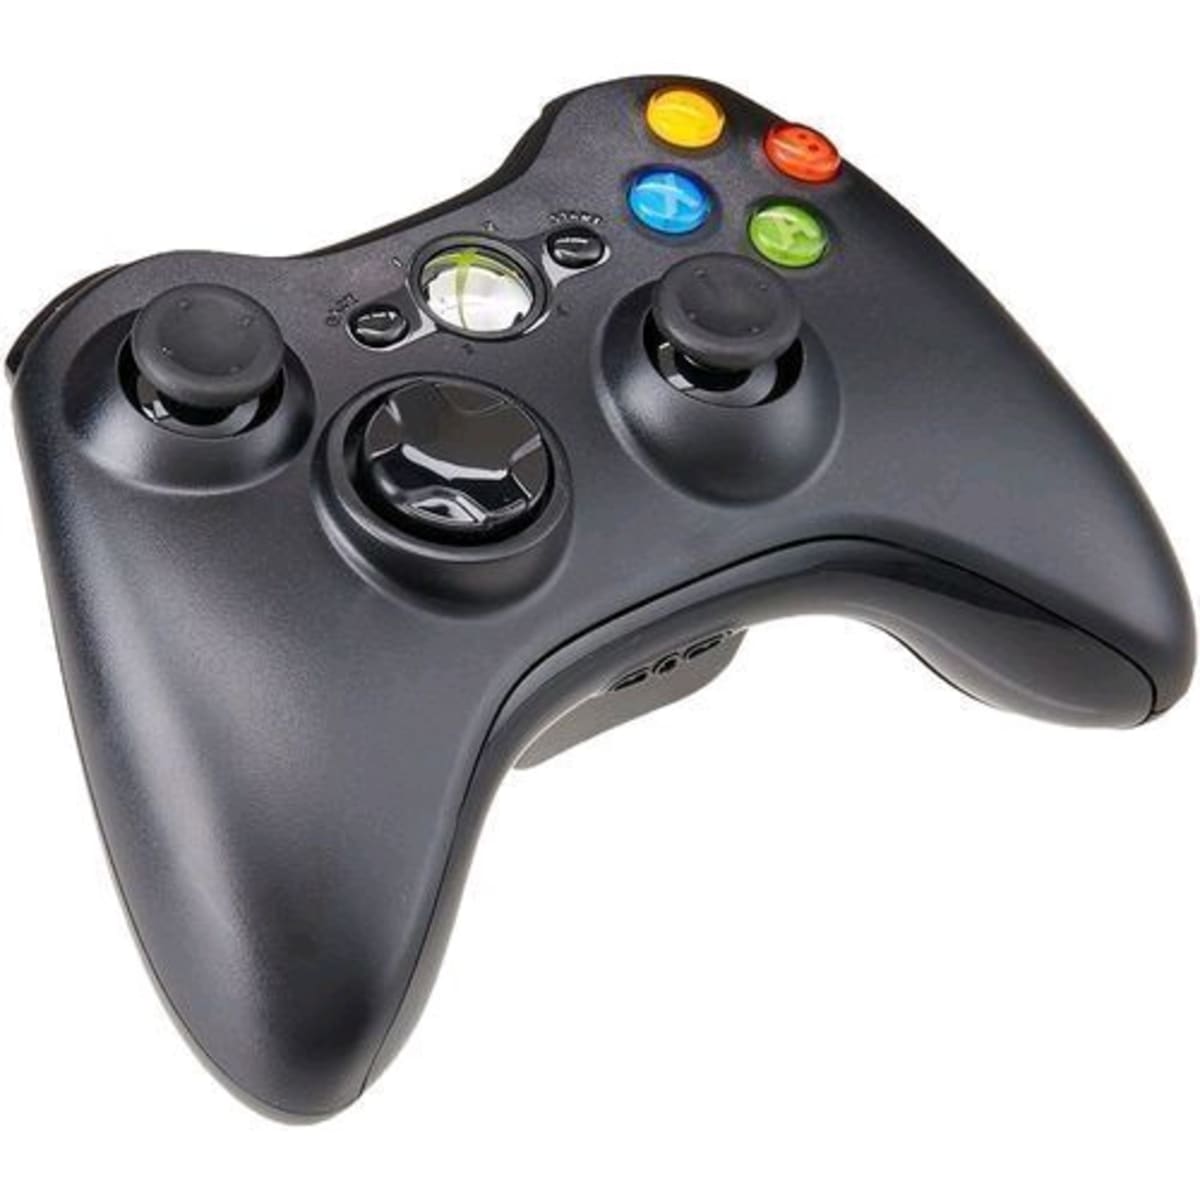 Xbox Wireless Controller – Black